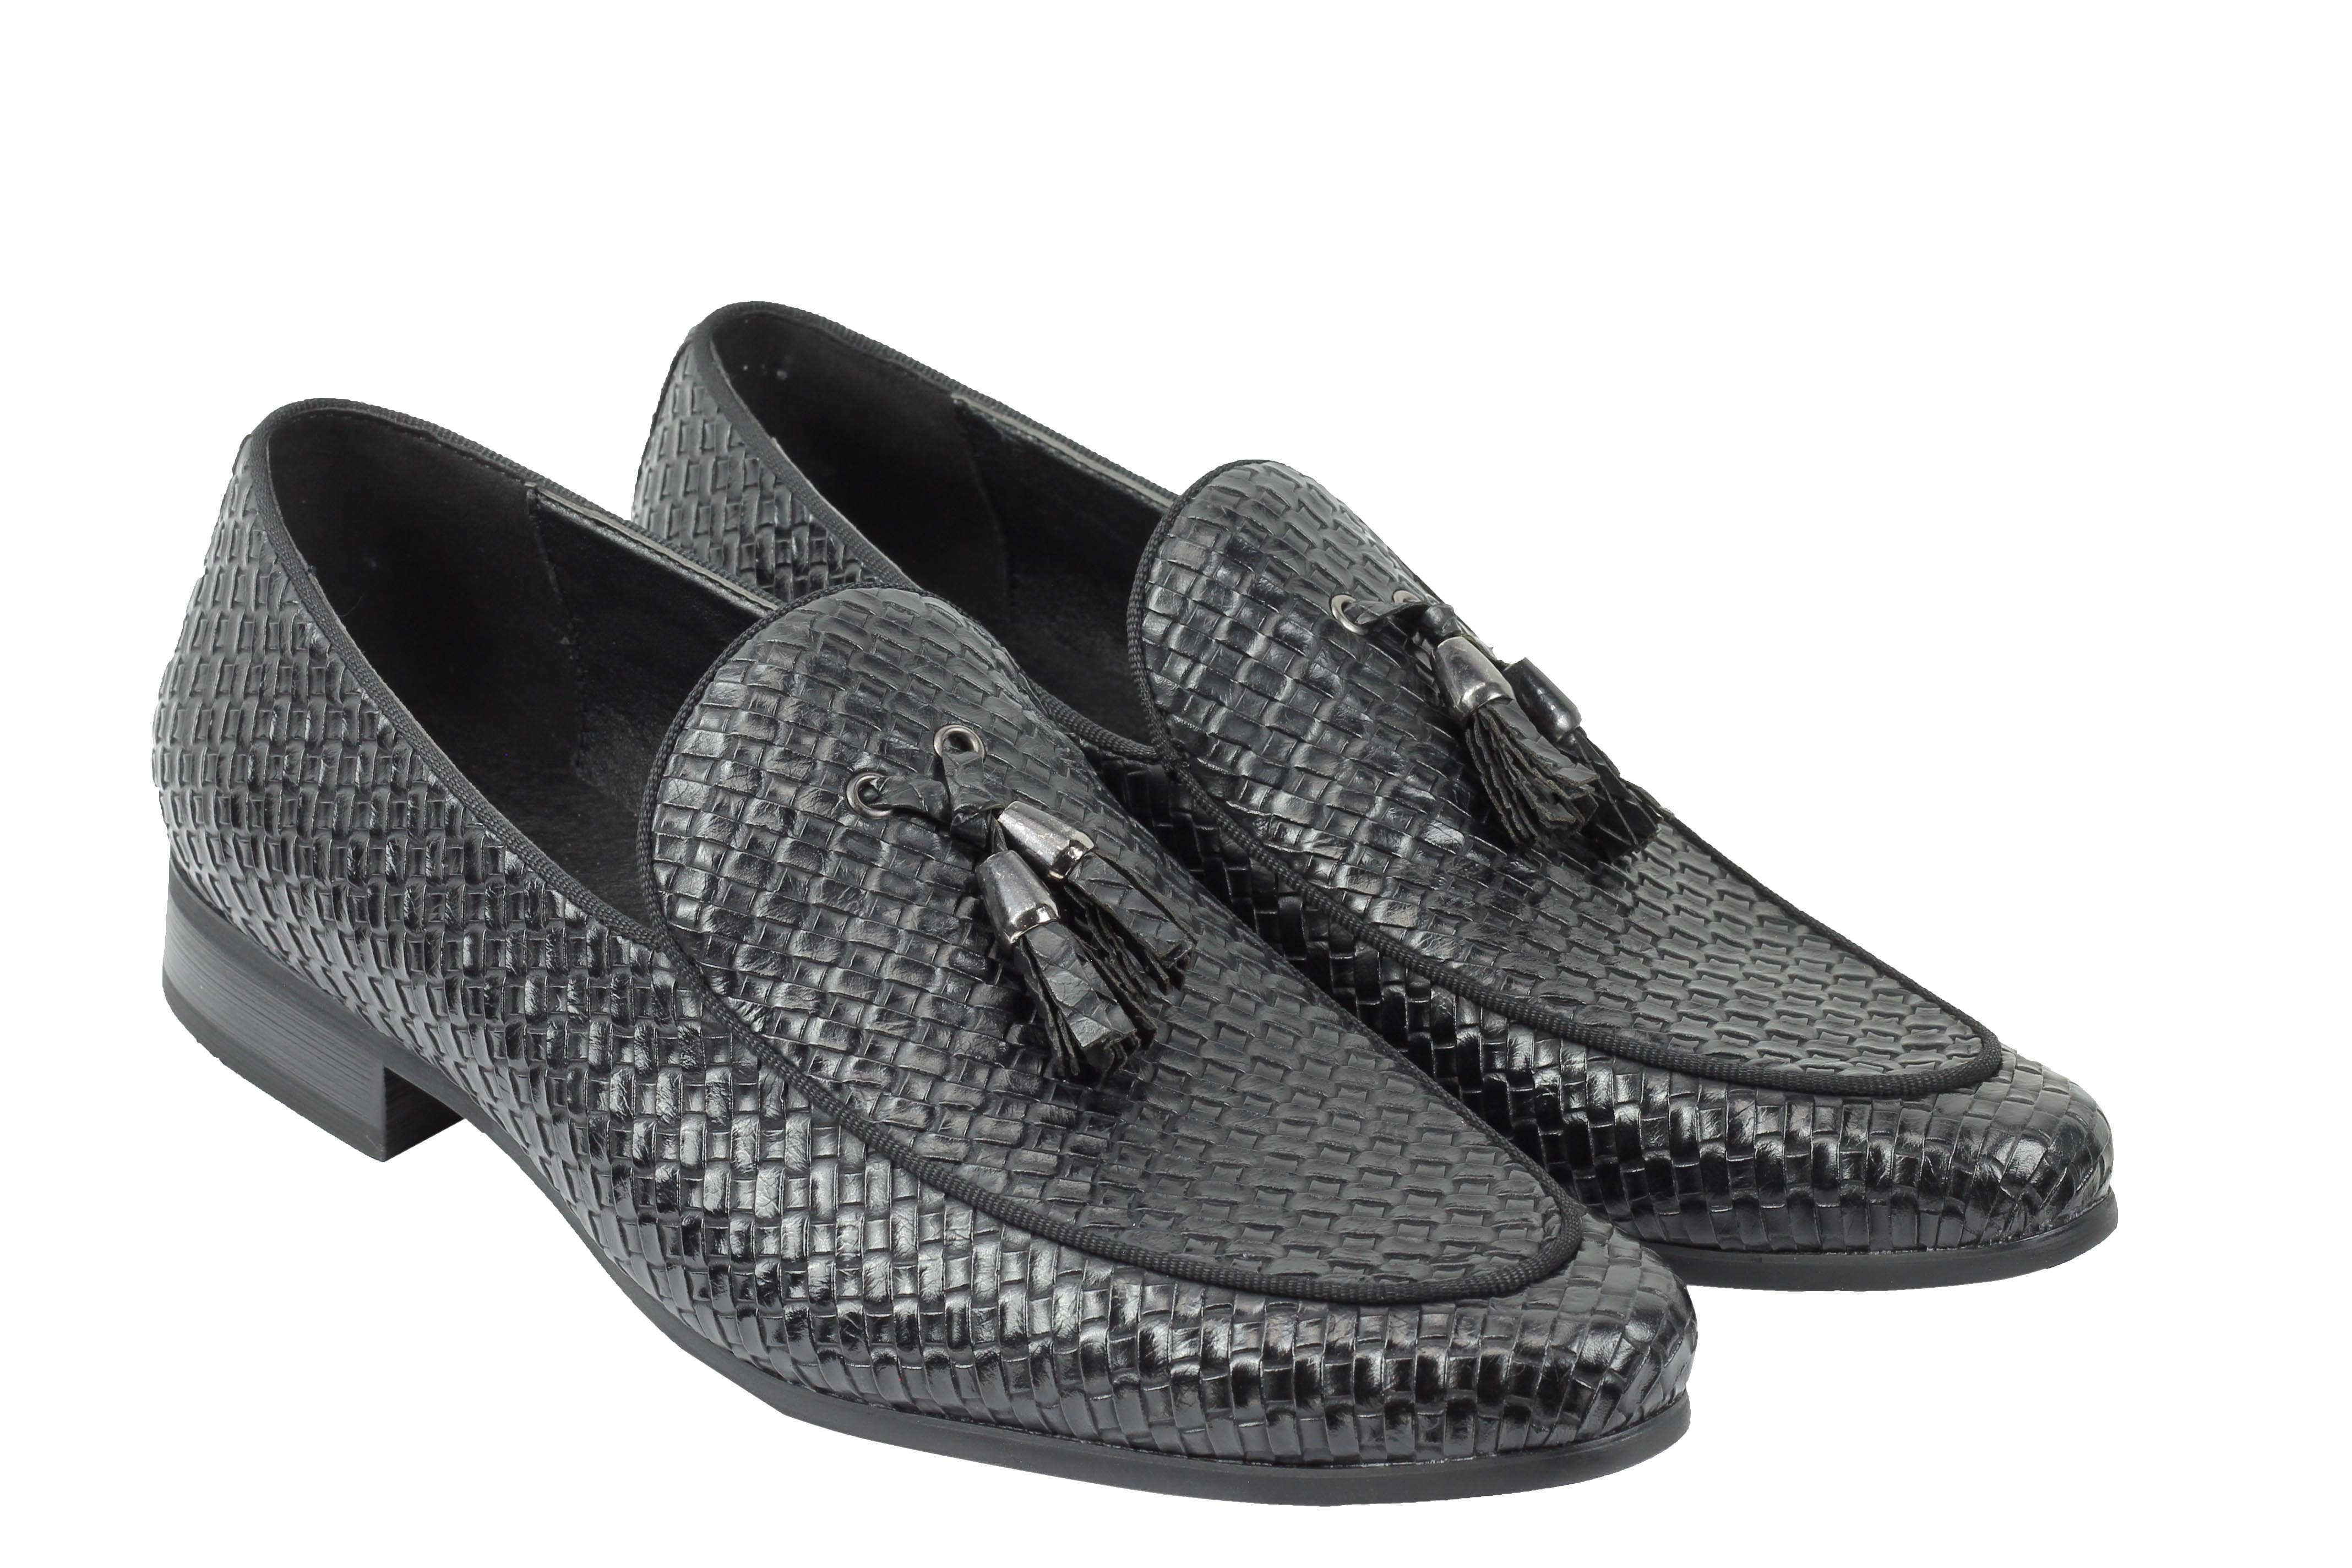 Retro Tassel Moccasin Loafers In Black